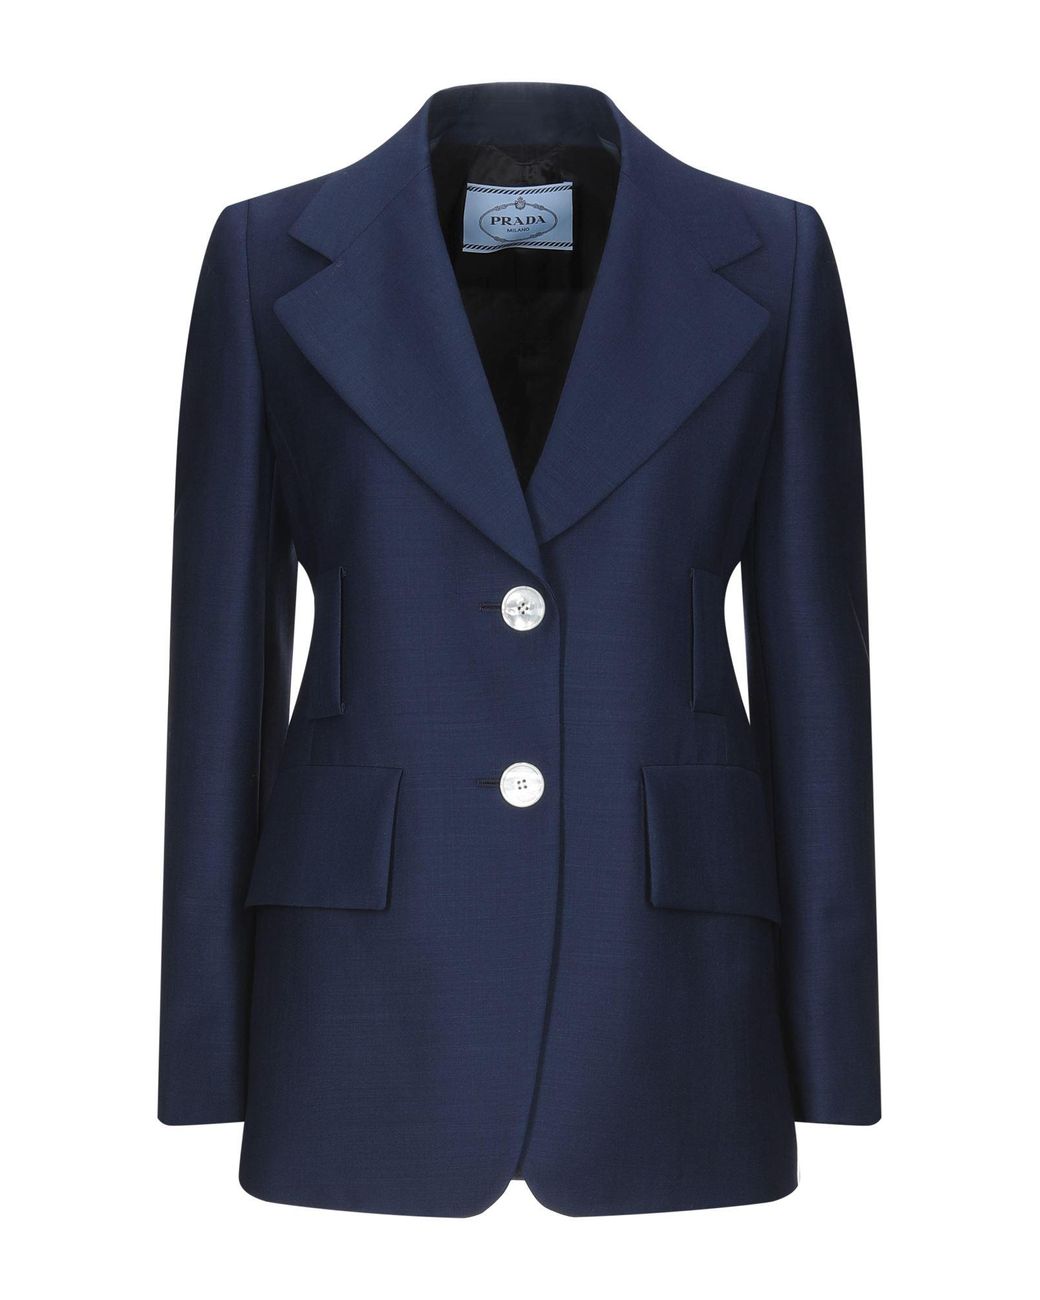 Prada Flannel Suit Jacket in Dark Blue (Blue) - Lyst